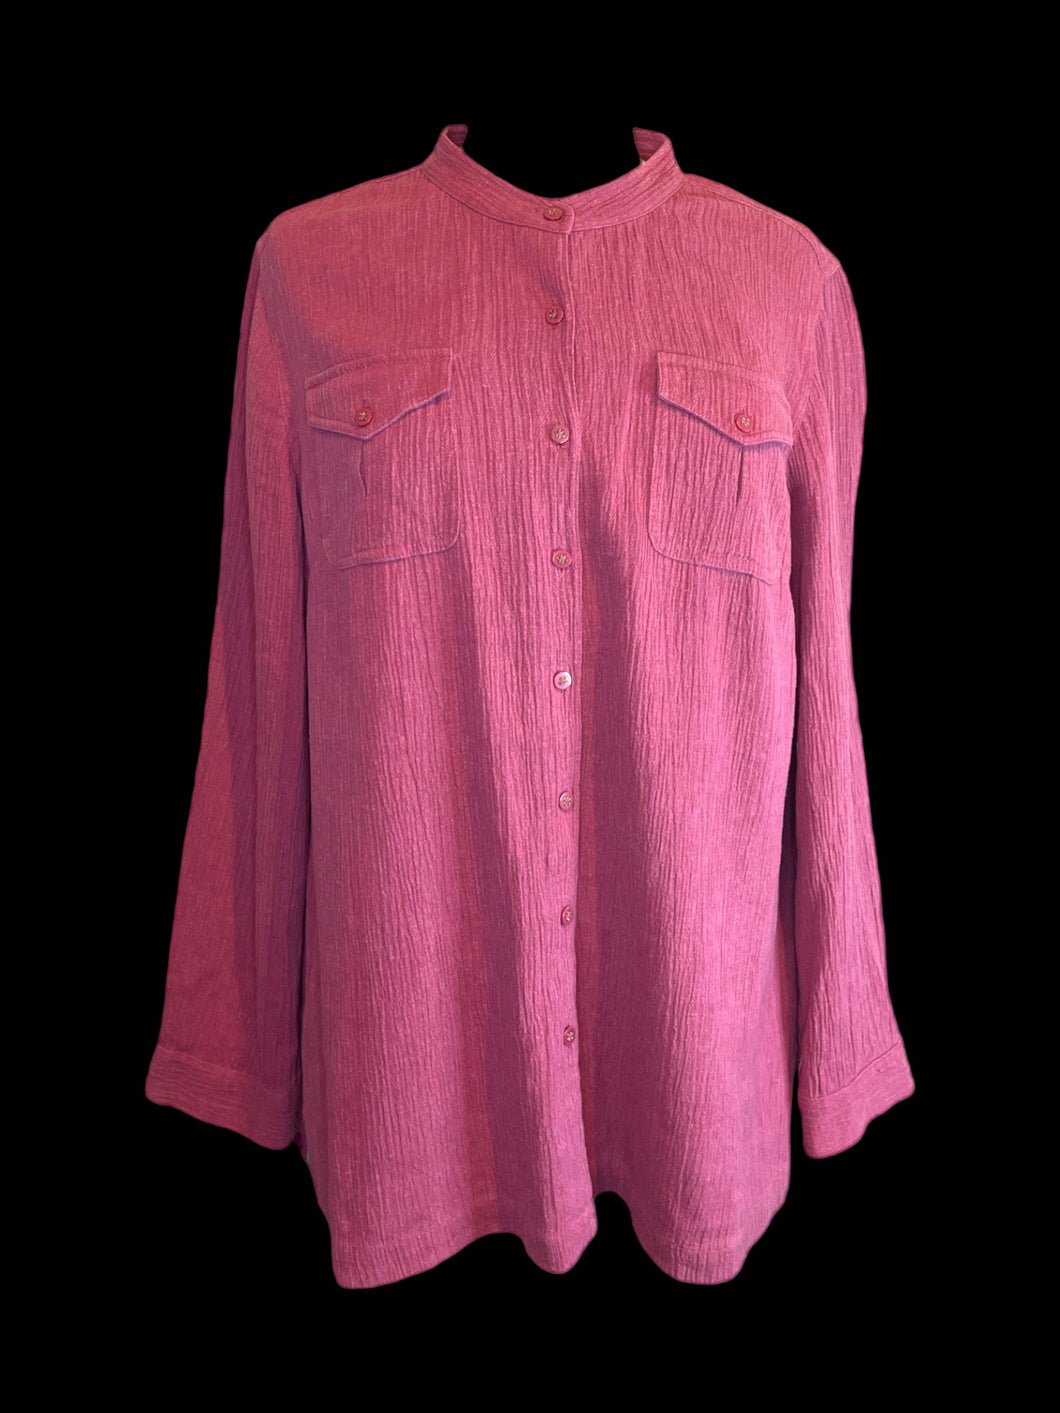 1X Vintage dark pink long sleeve button down linen top w/ tab button cuffs, & chest pockets